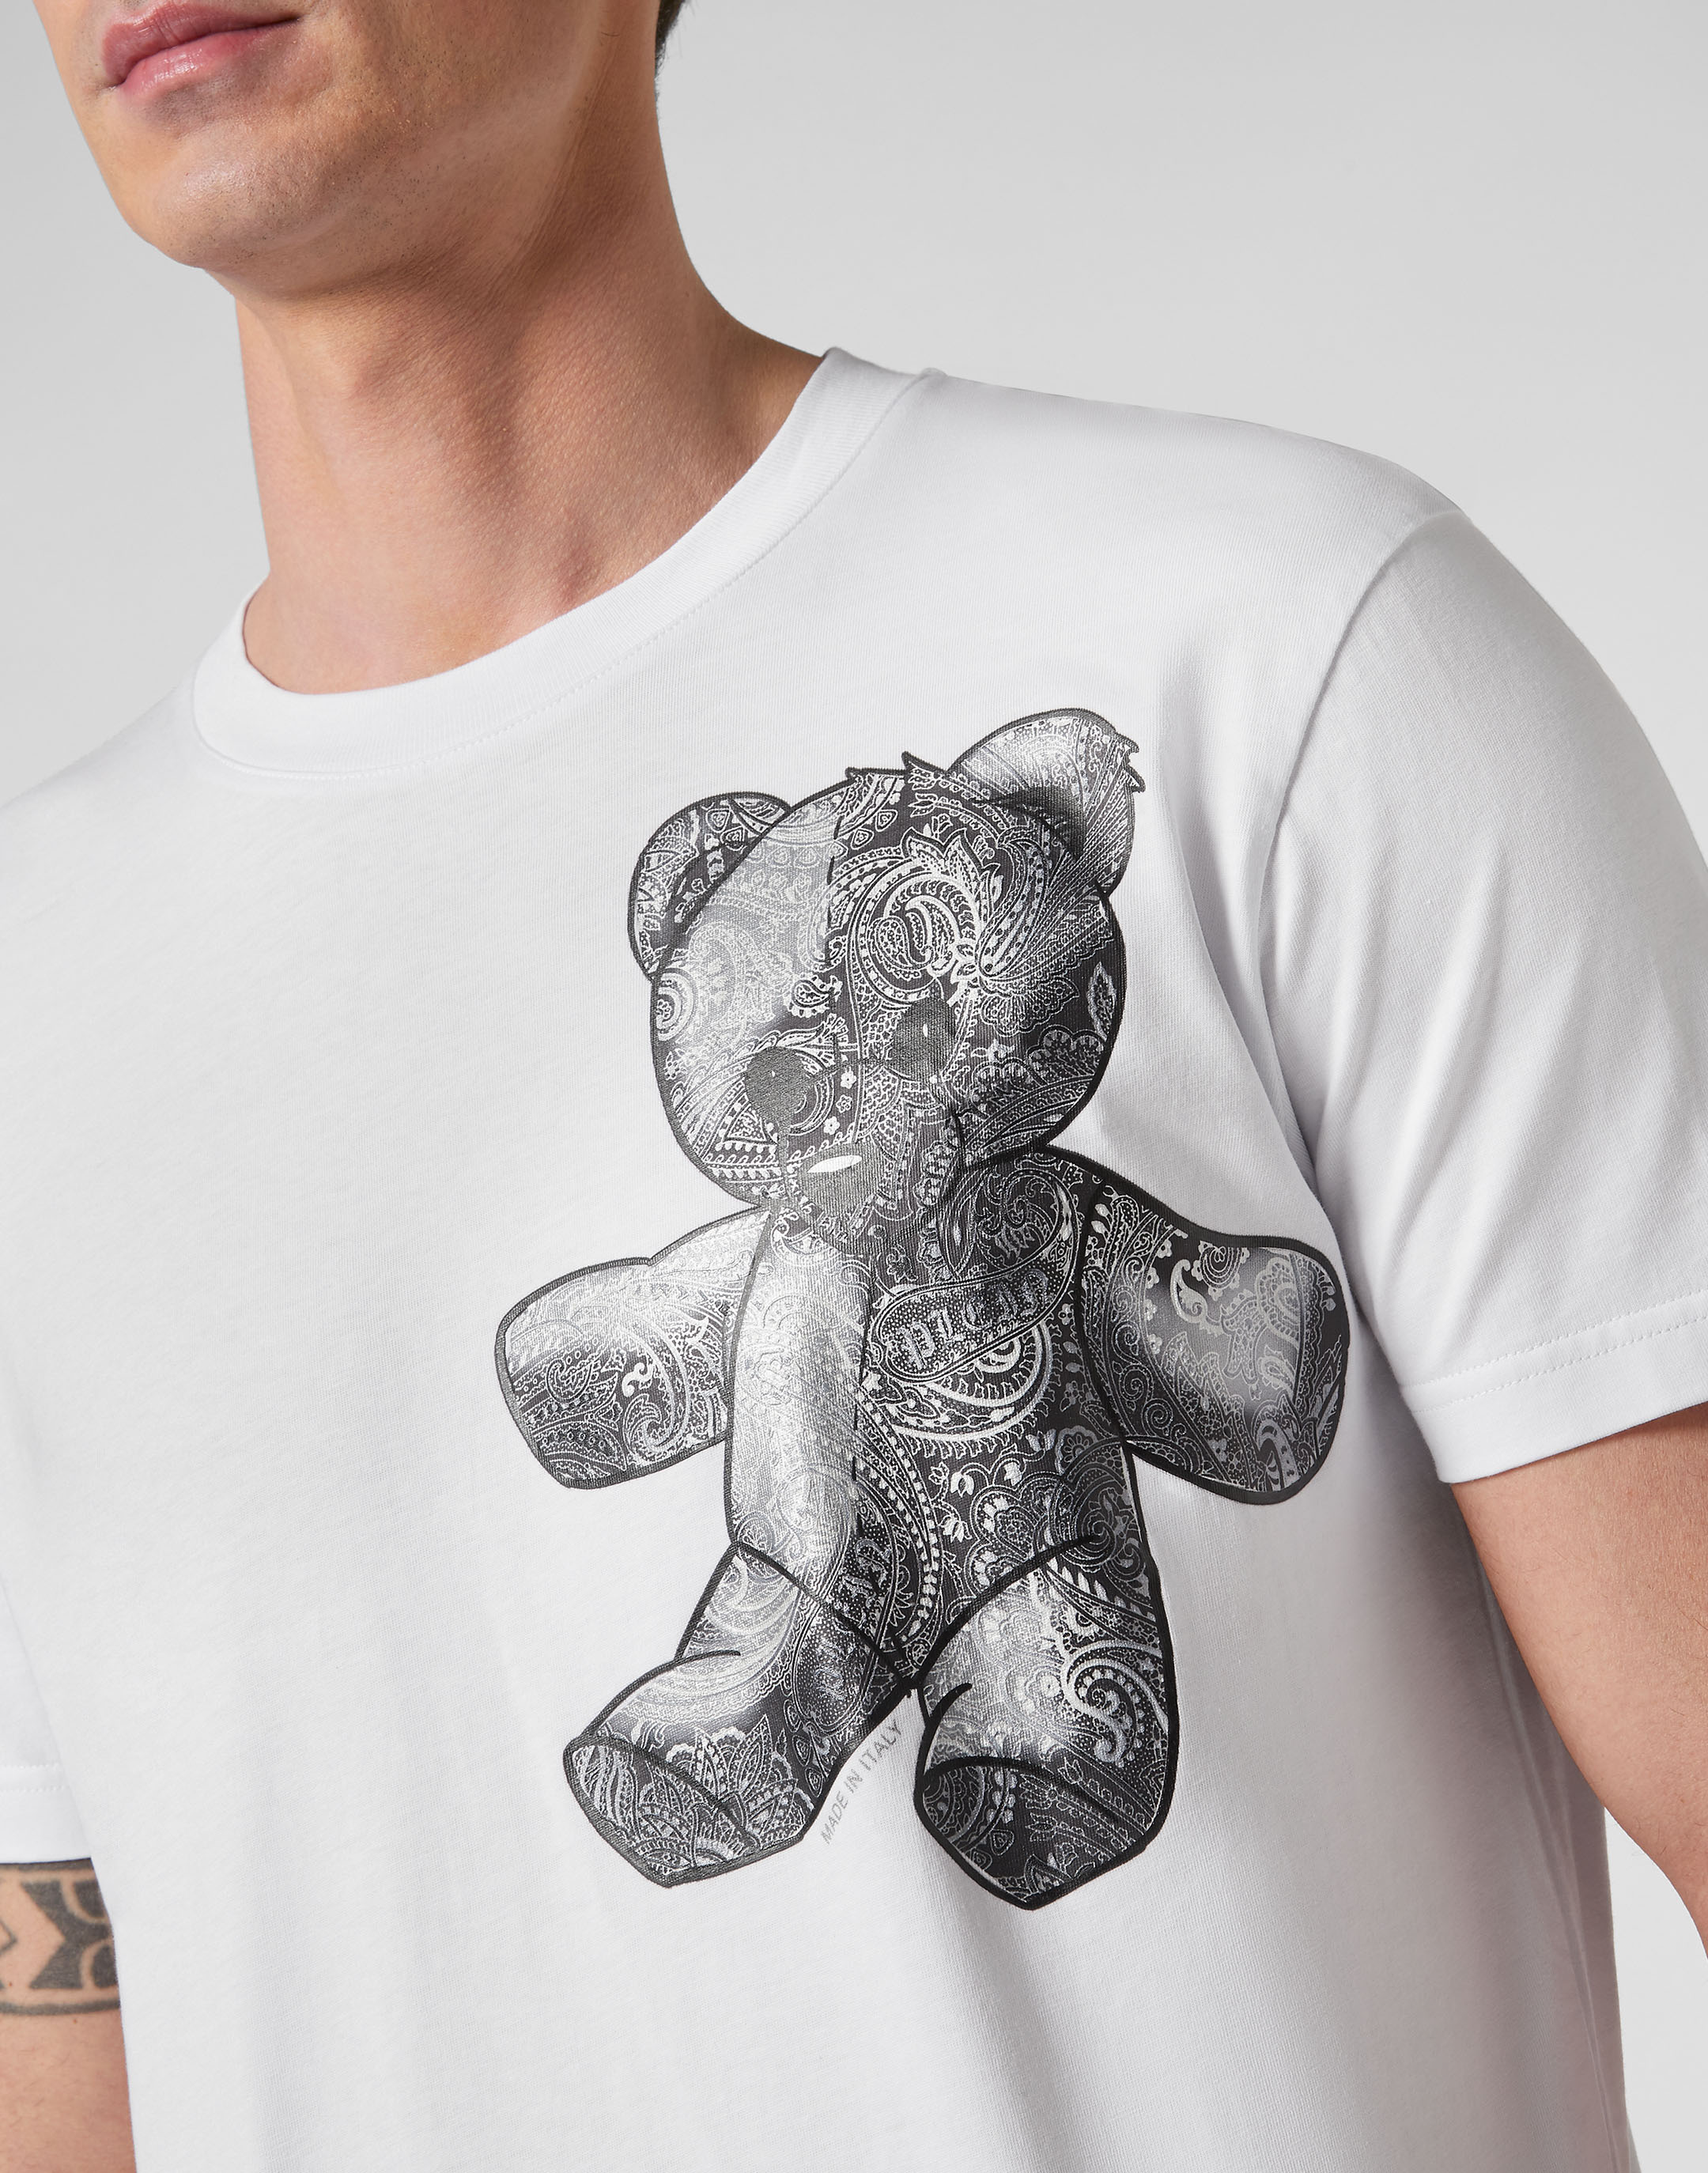 Philipp Plein Round Neck SS Paisley Teddy Bear T-Shirt